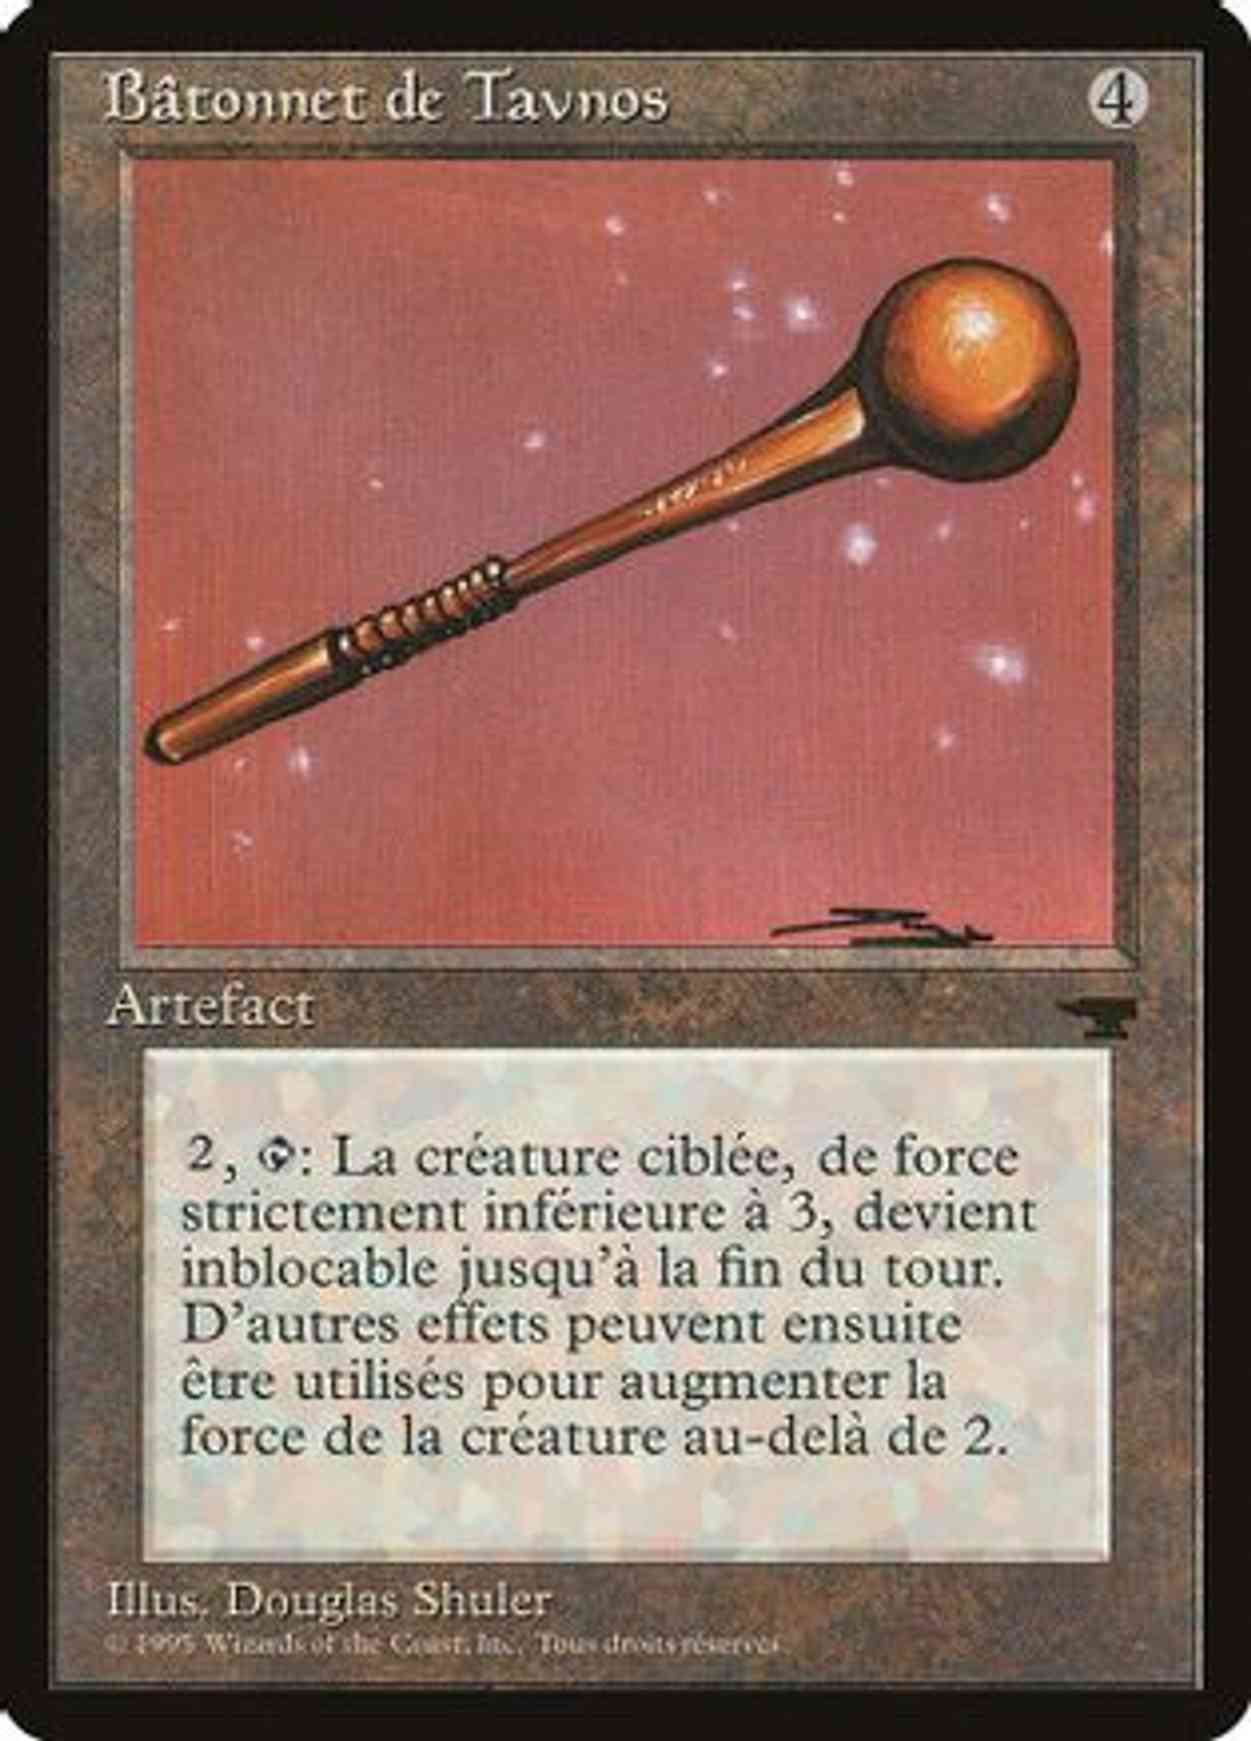 Tawnos's Wand (French) - "Batonnet de Tavnos" magic card front